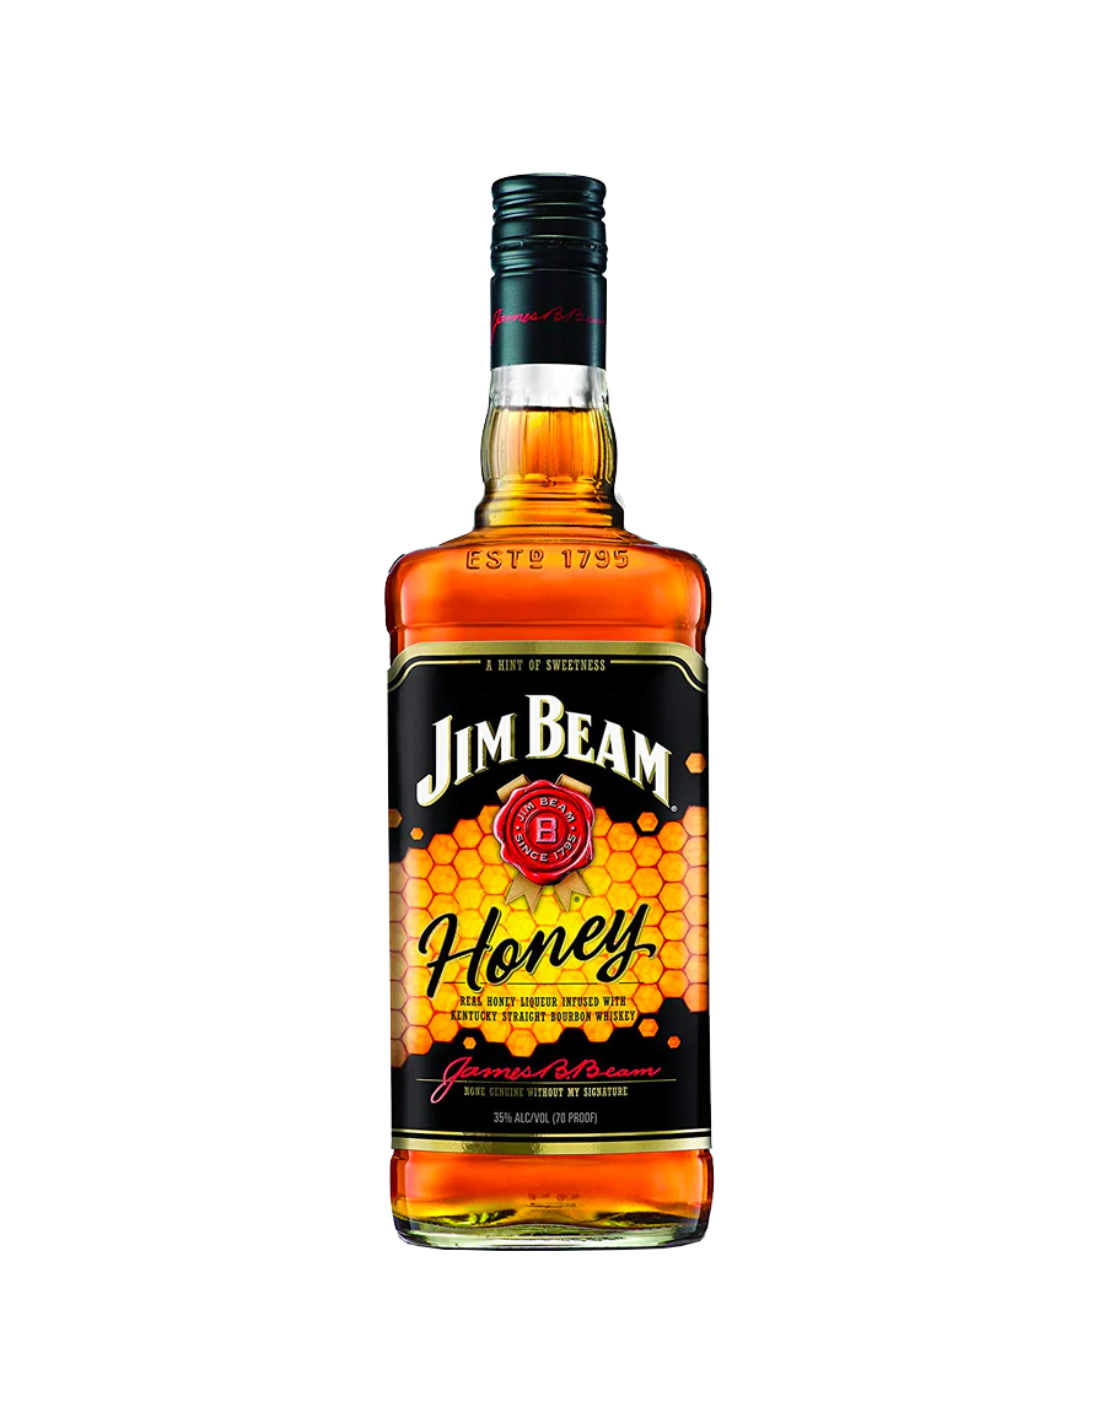 Whisky Jim Beam Honey, 0.7L, 35% alc., SUA alcooldiscount.ro